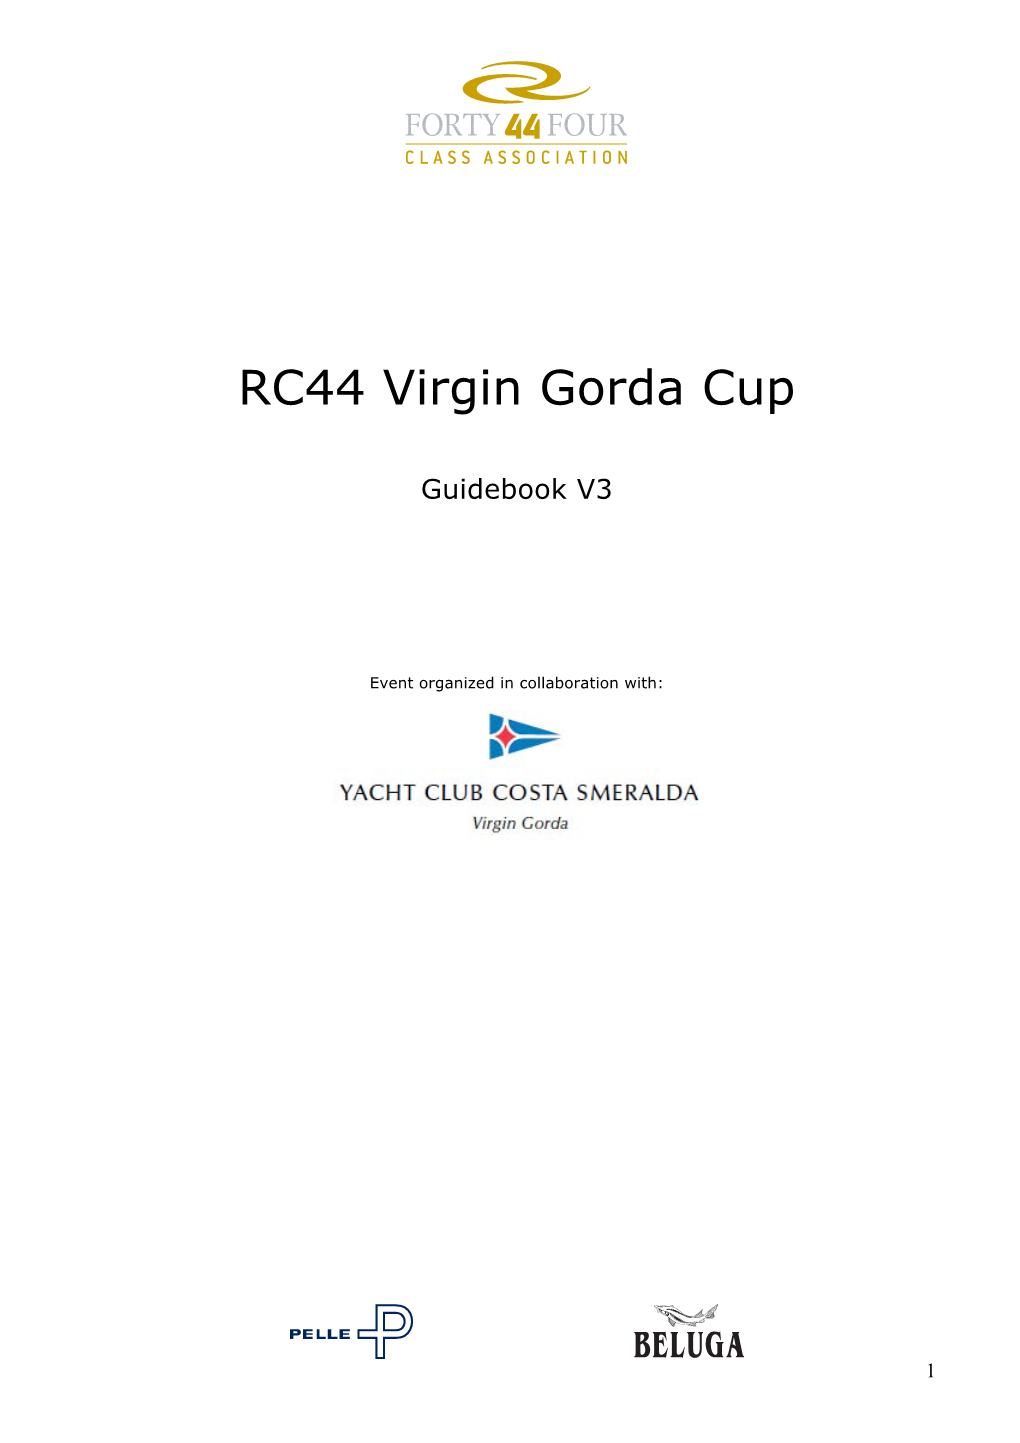 Virgin Gorda Cup Guidebook